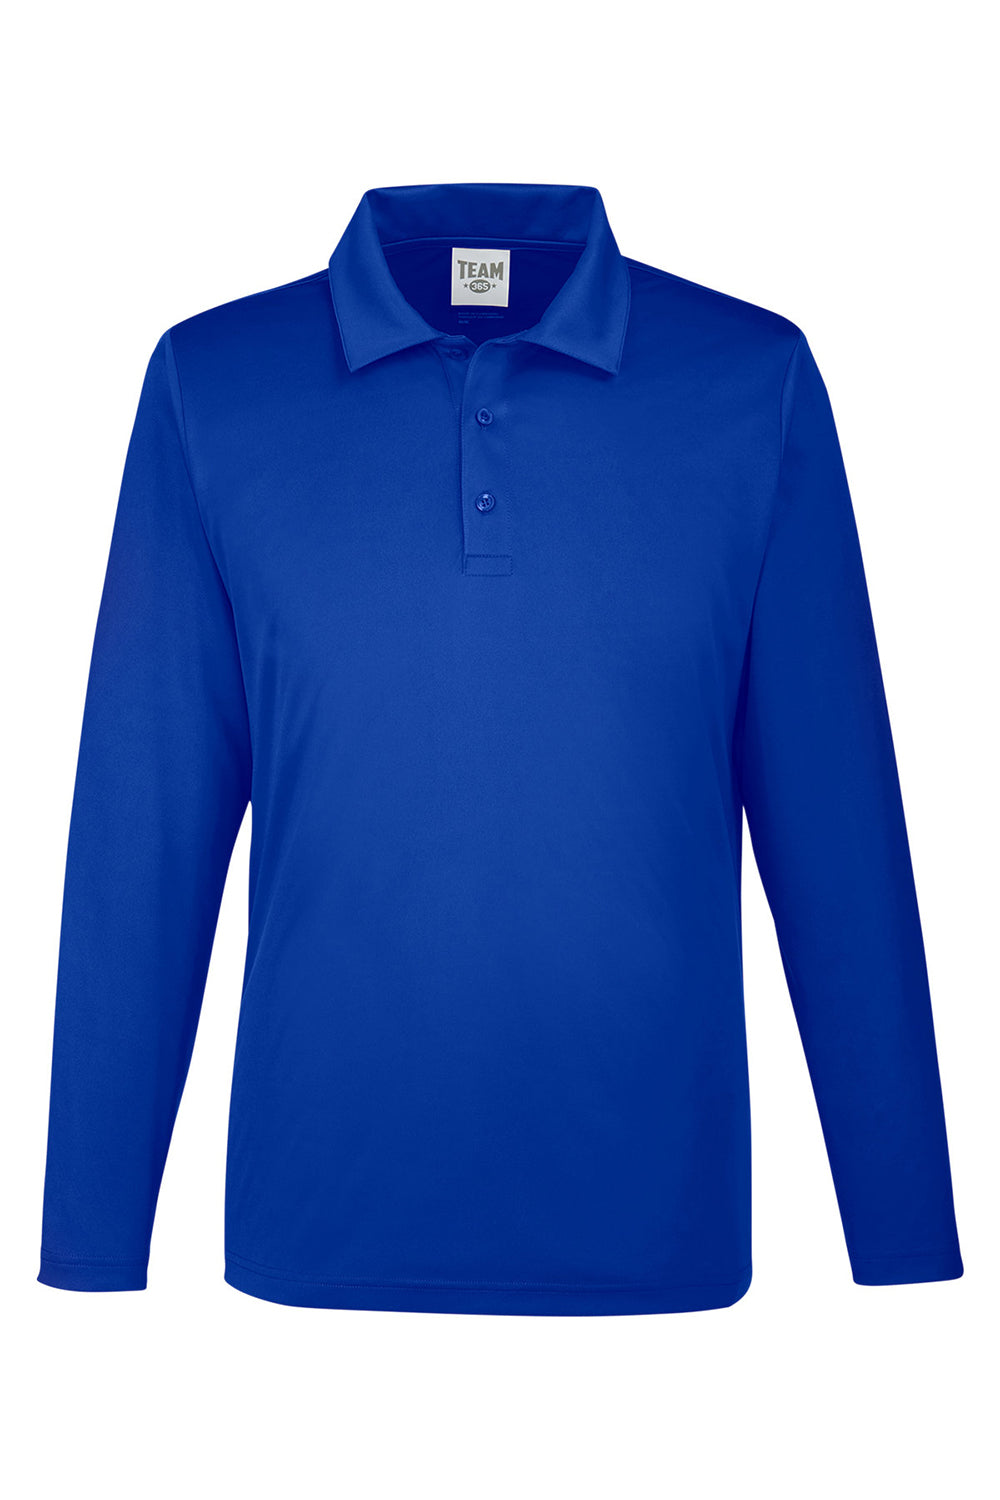 Team 365 TT51L Mens Zone Sonic Moisture Wicking Long Sleeve Polo Shirt Royal Blue Flat Front